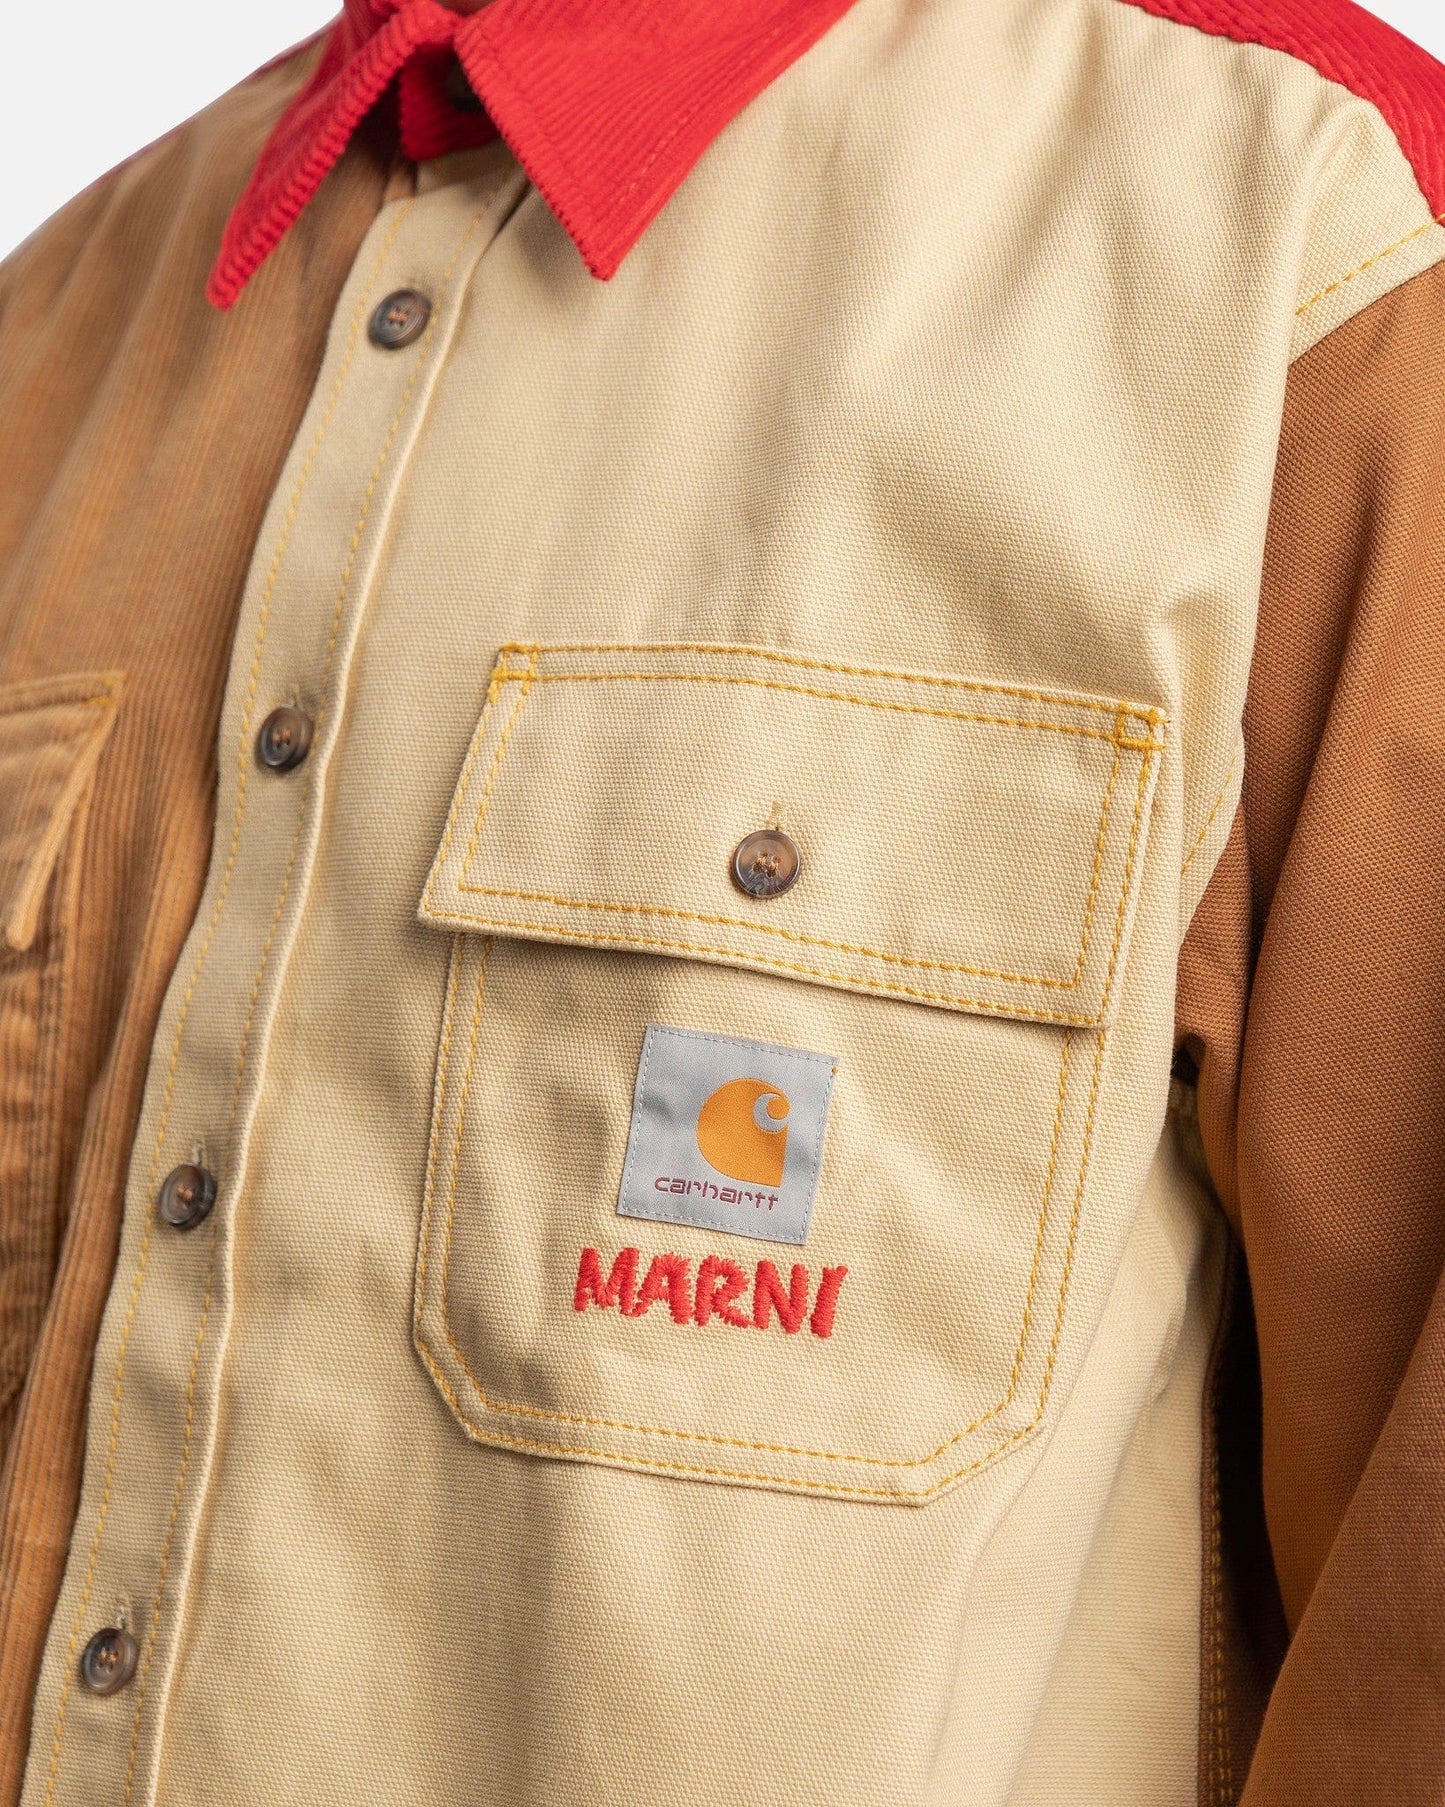 Marni Men's Shirt Carhartt Cotton Canvas Shirt in Tobacco